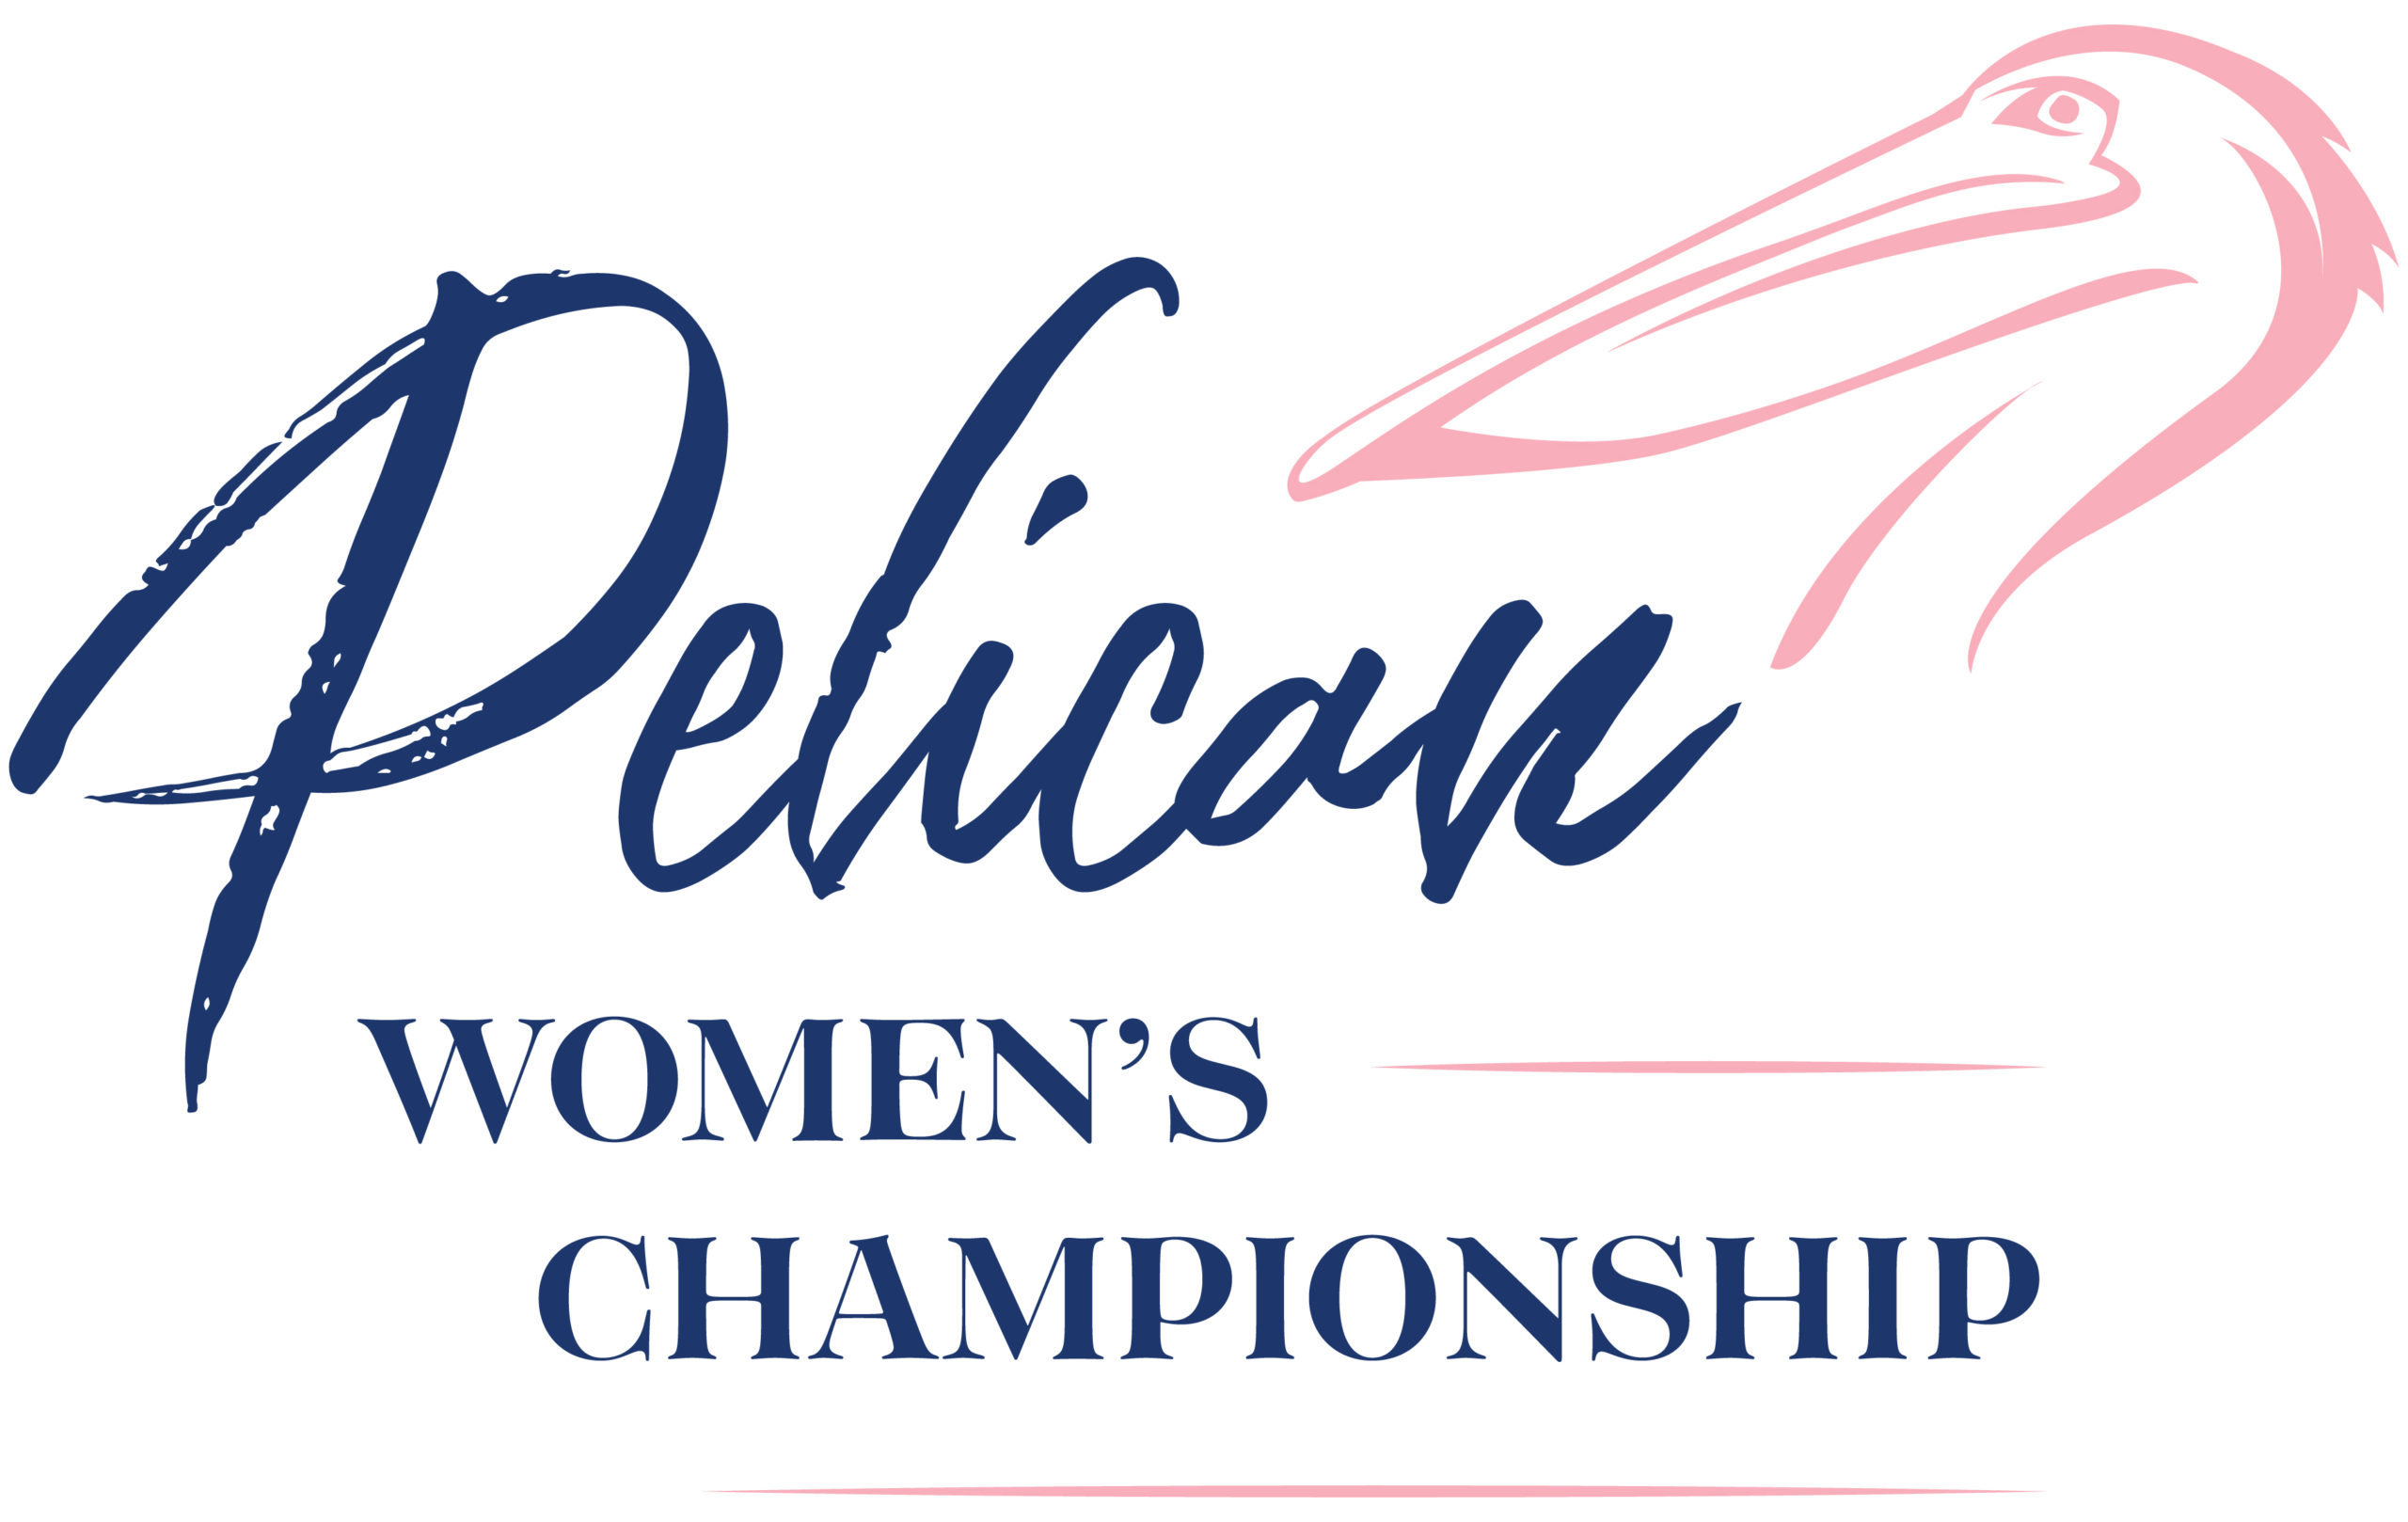 Pelican Women's Championship logo